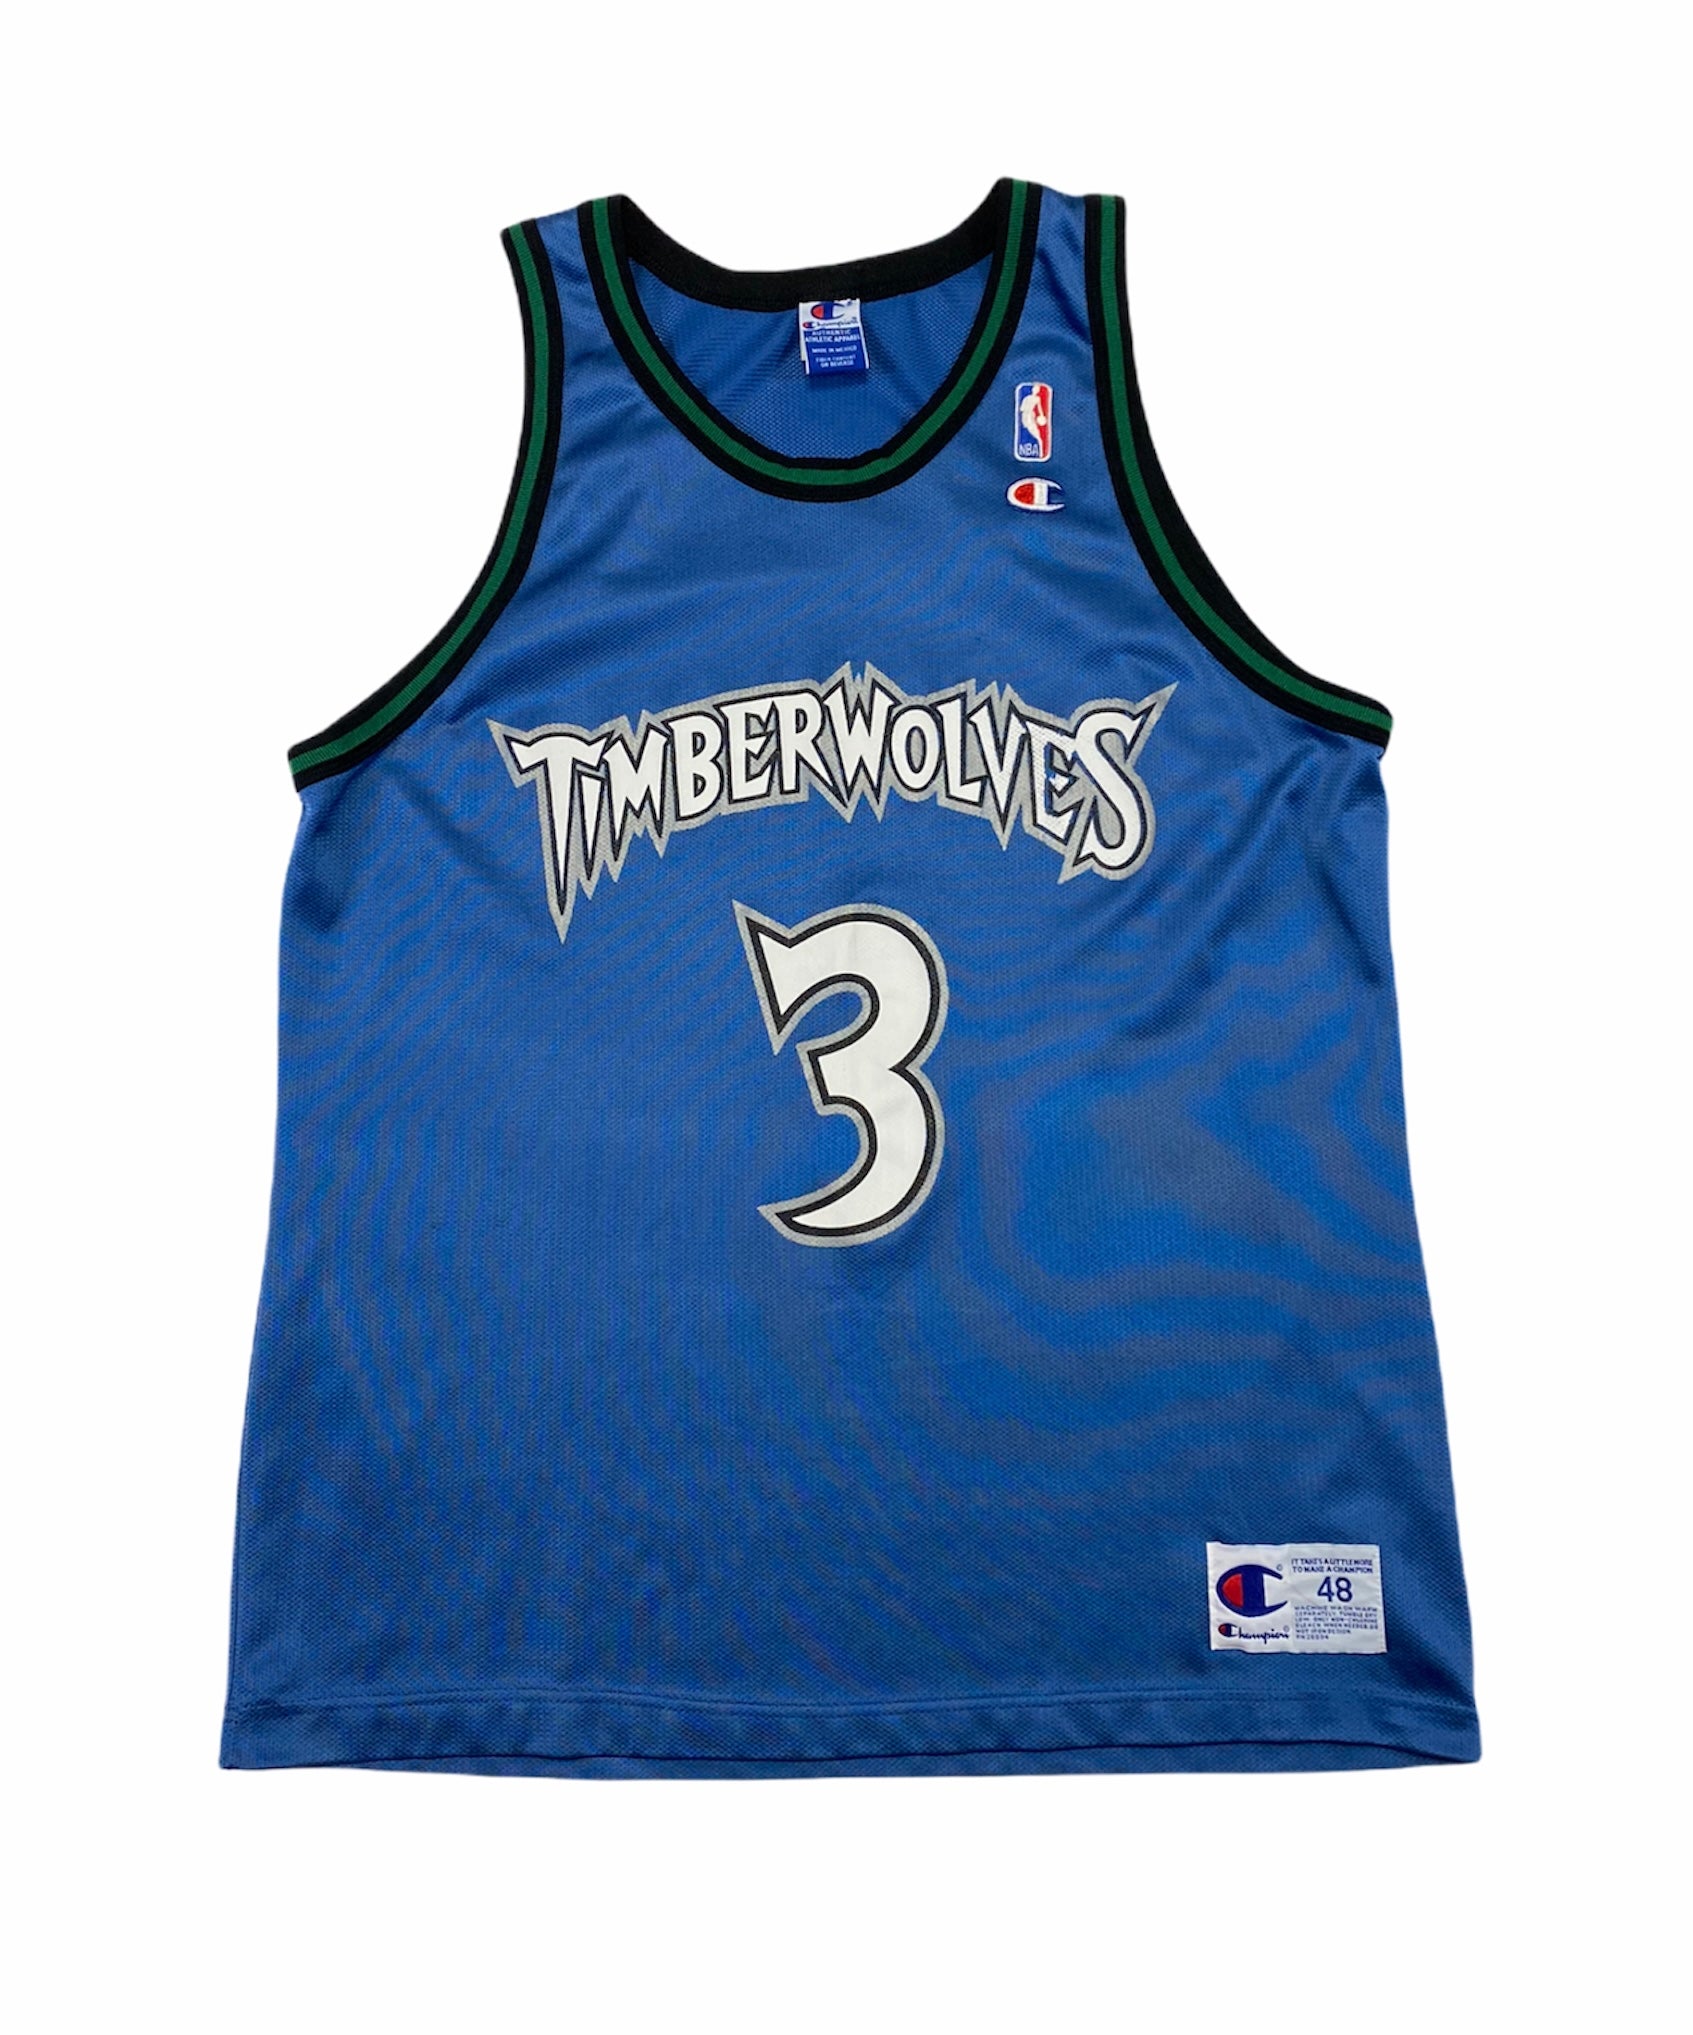 timberwolves basketball shirt